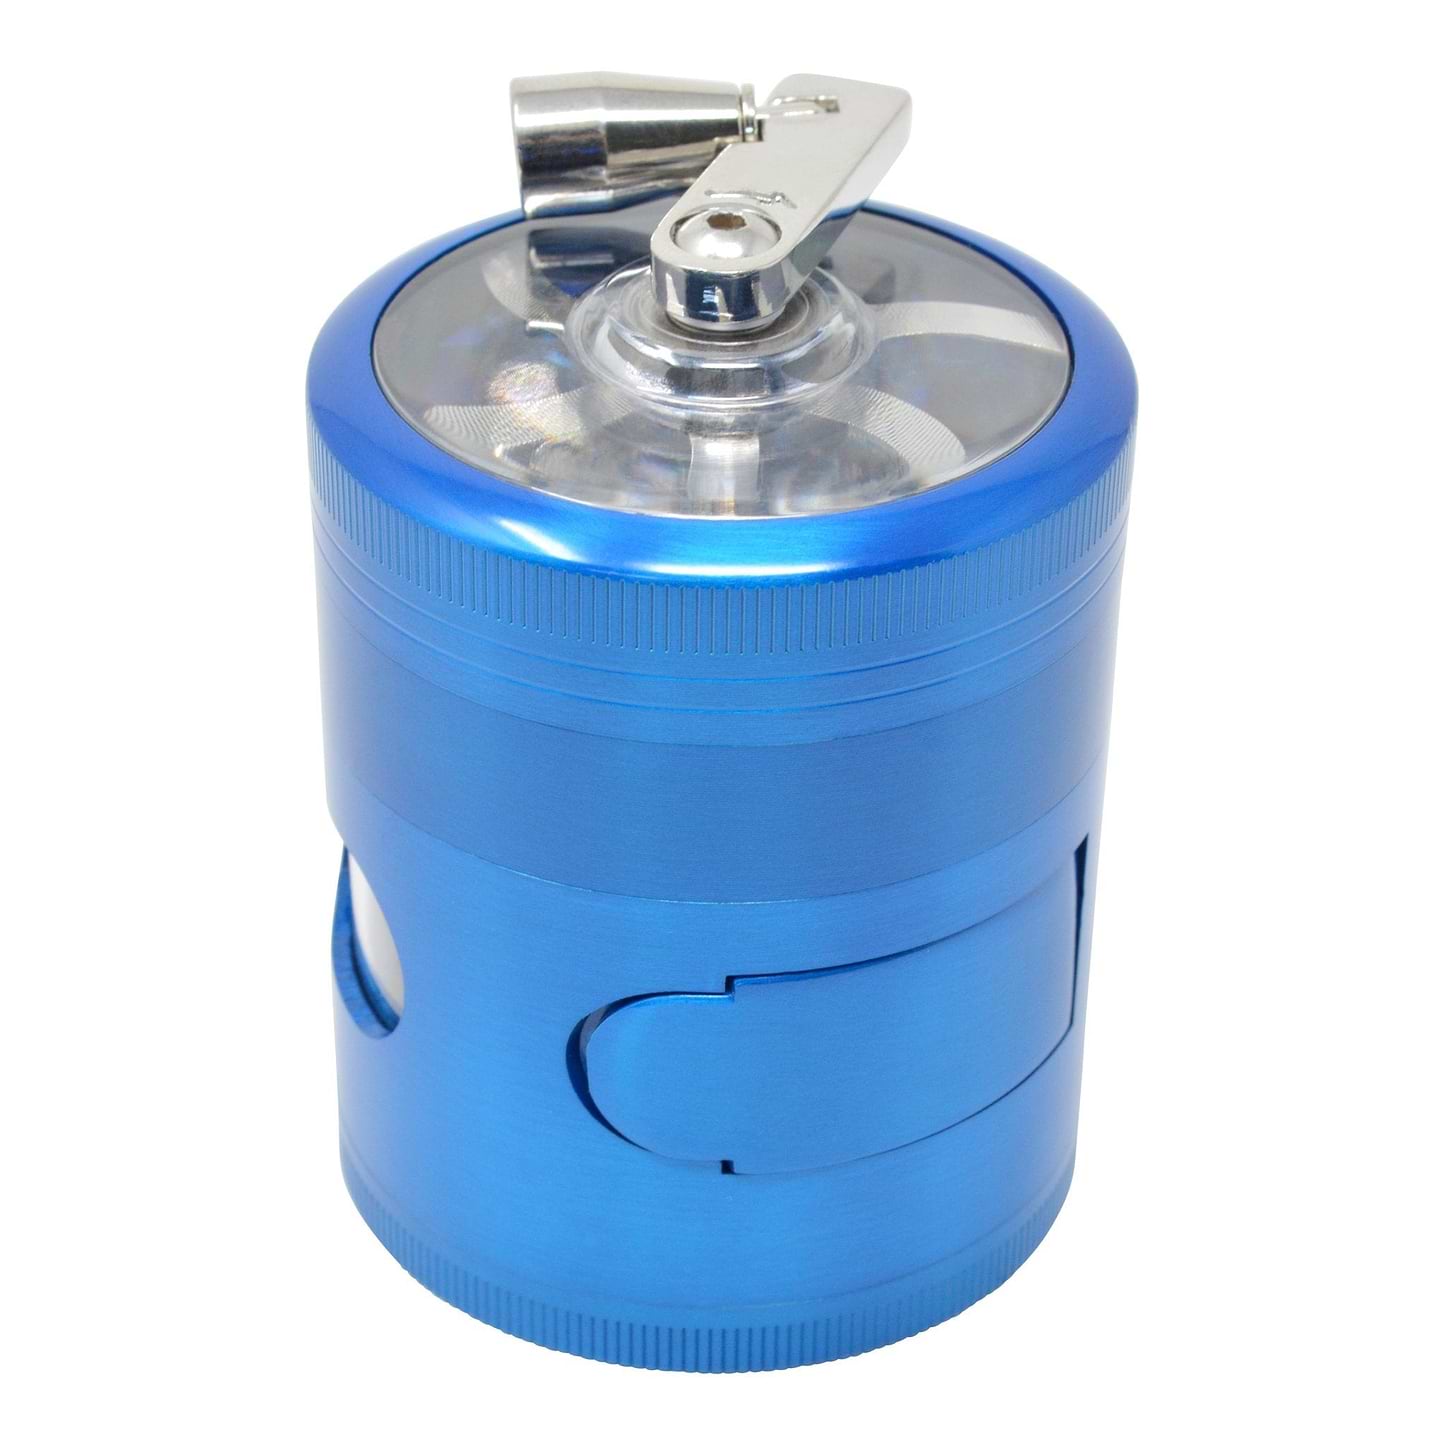 Full front shot of blue 56mm dub grinder mechanical sharpener look hand crank on back closed kief catcher opening